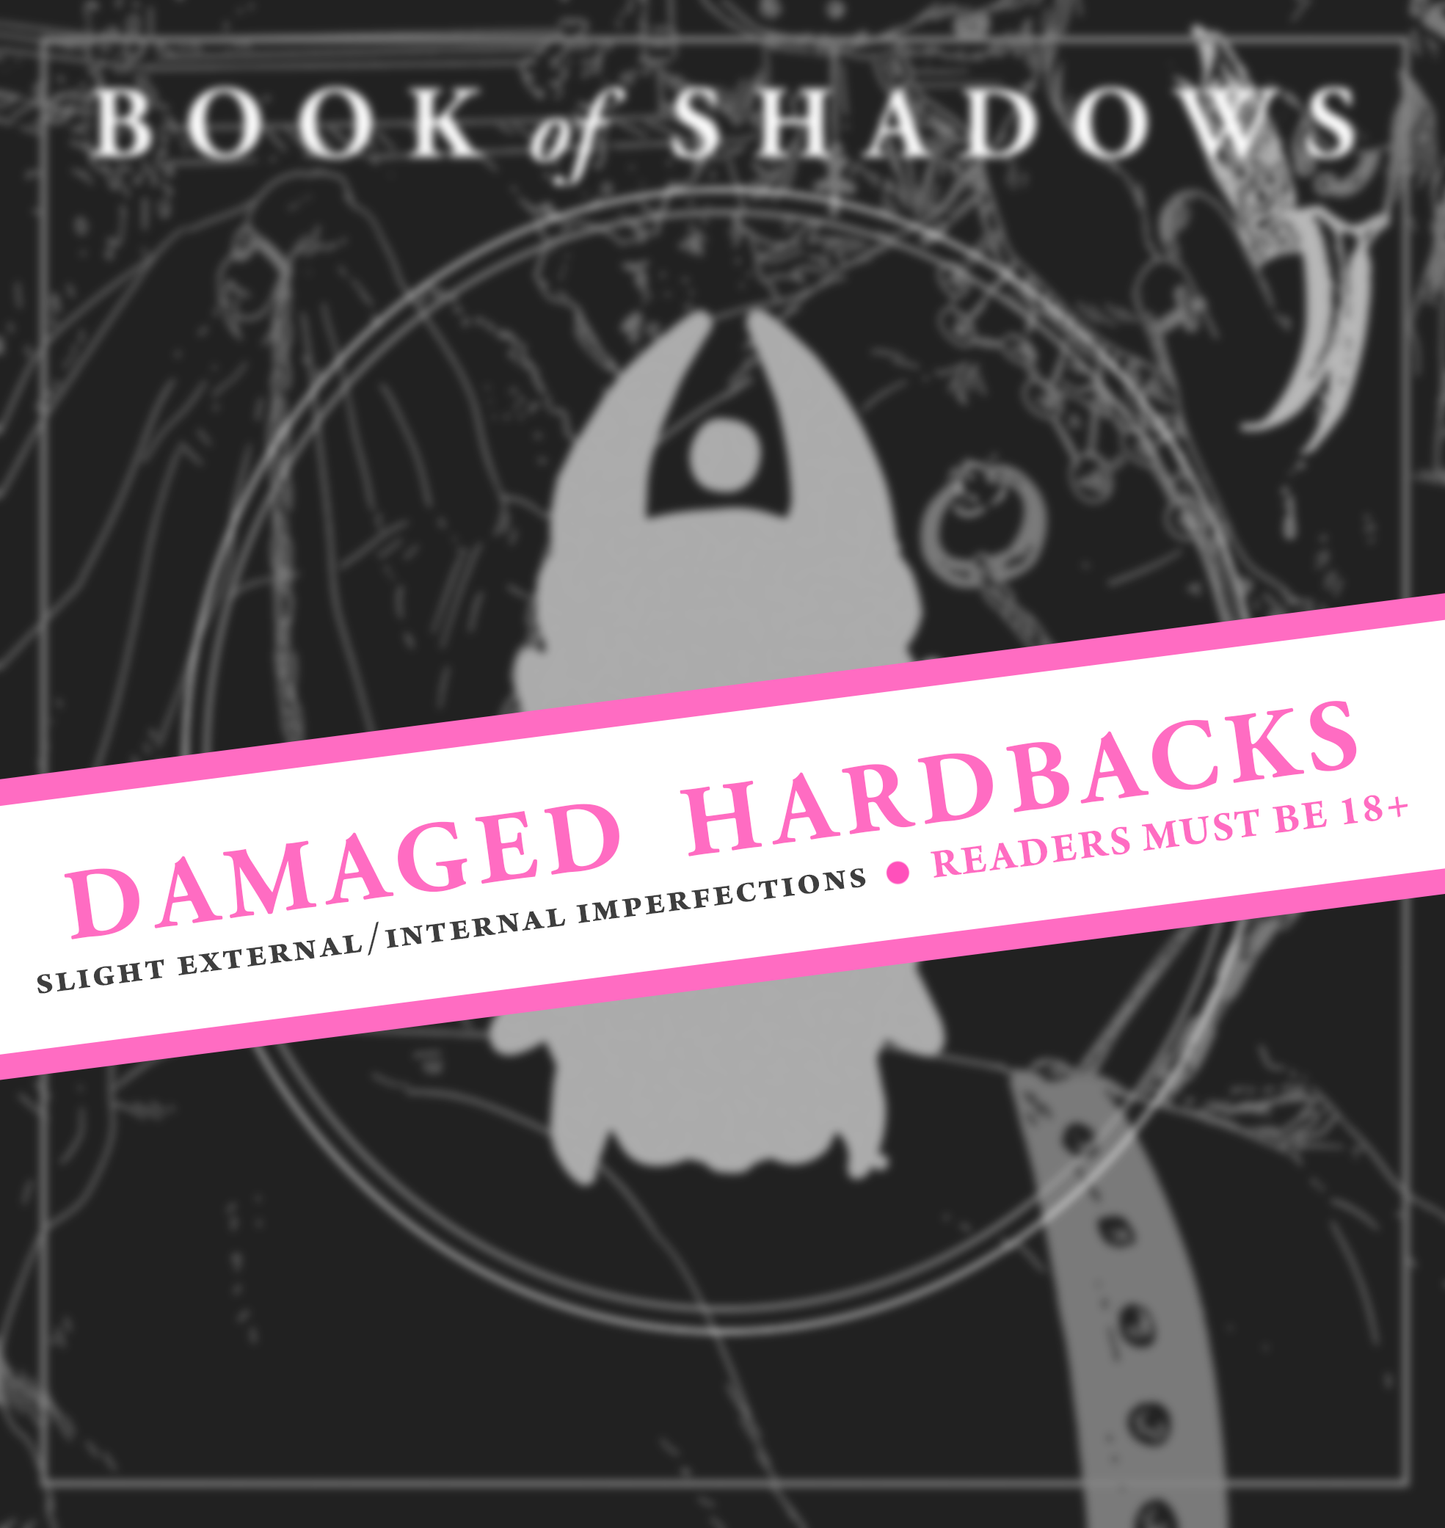 Book of Shadows: BUFFOMET (Dinged/Damaged Hardbacks)